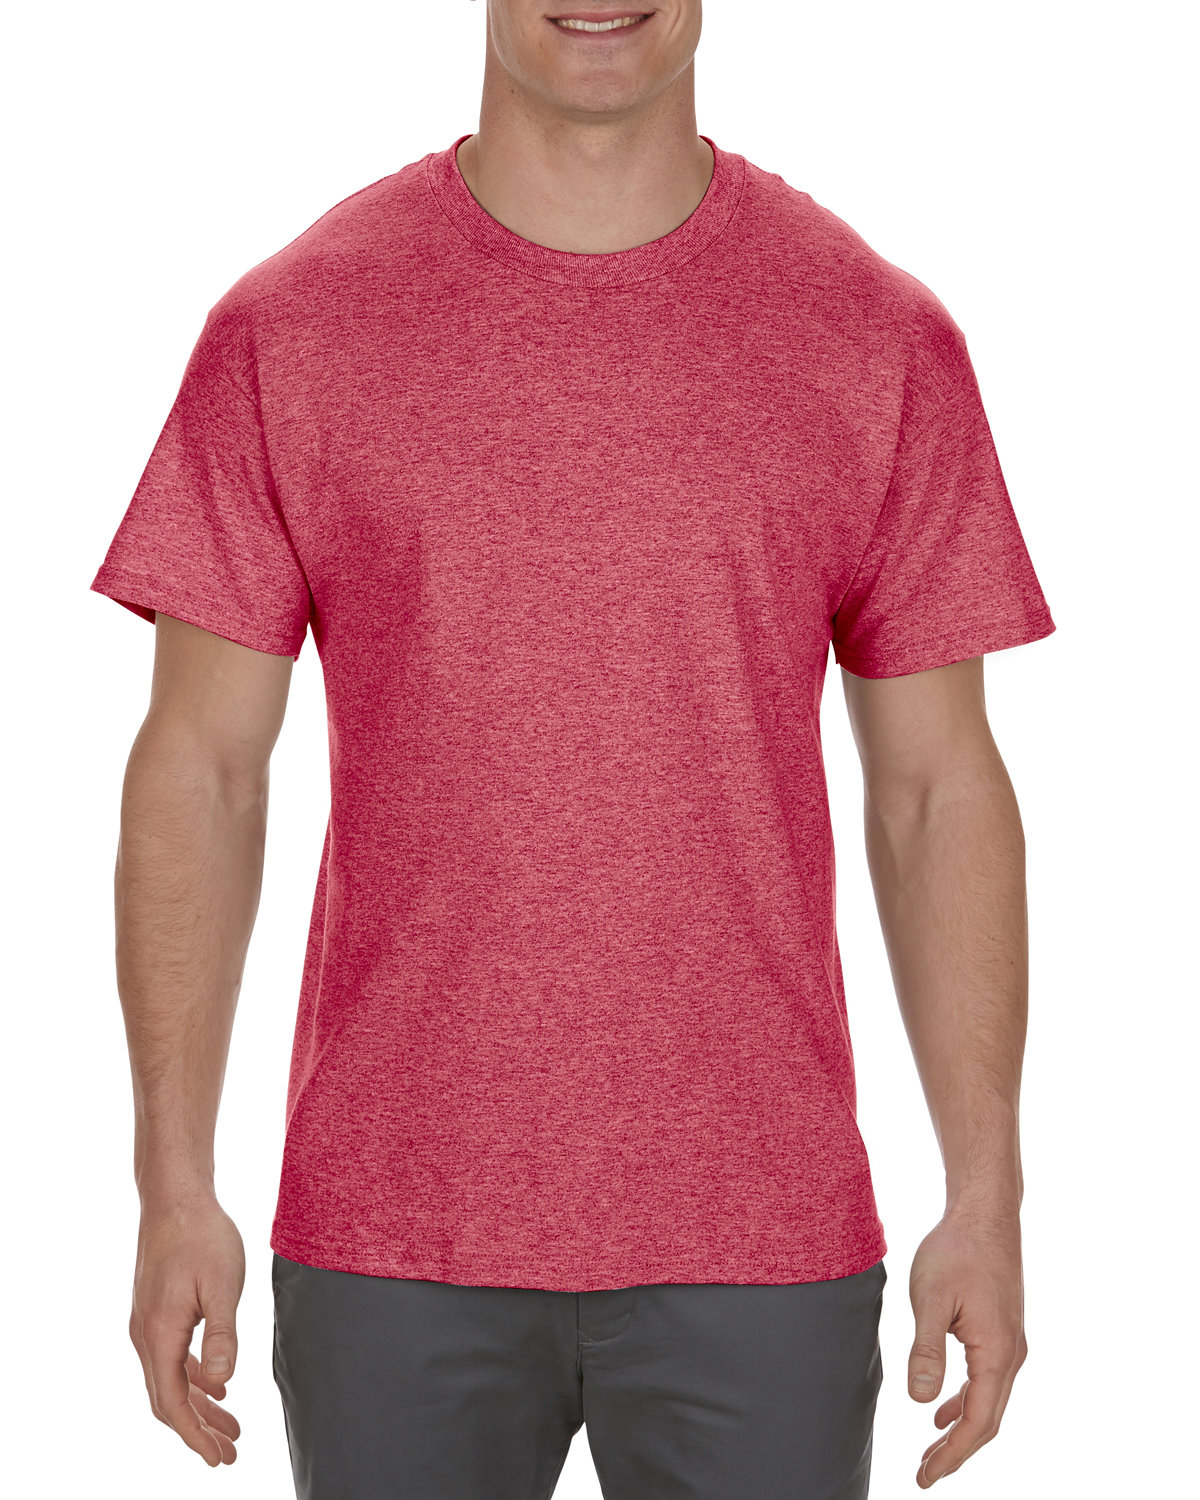 Alstyle Adult 5.1 oz., 100% Soft Spun Cotton T-Shirt RED HEATHER 